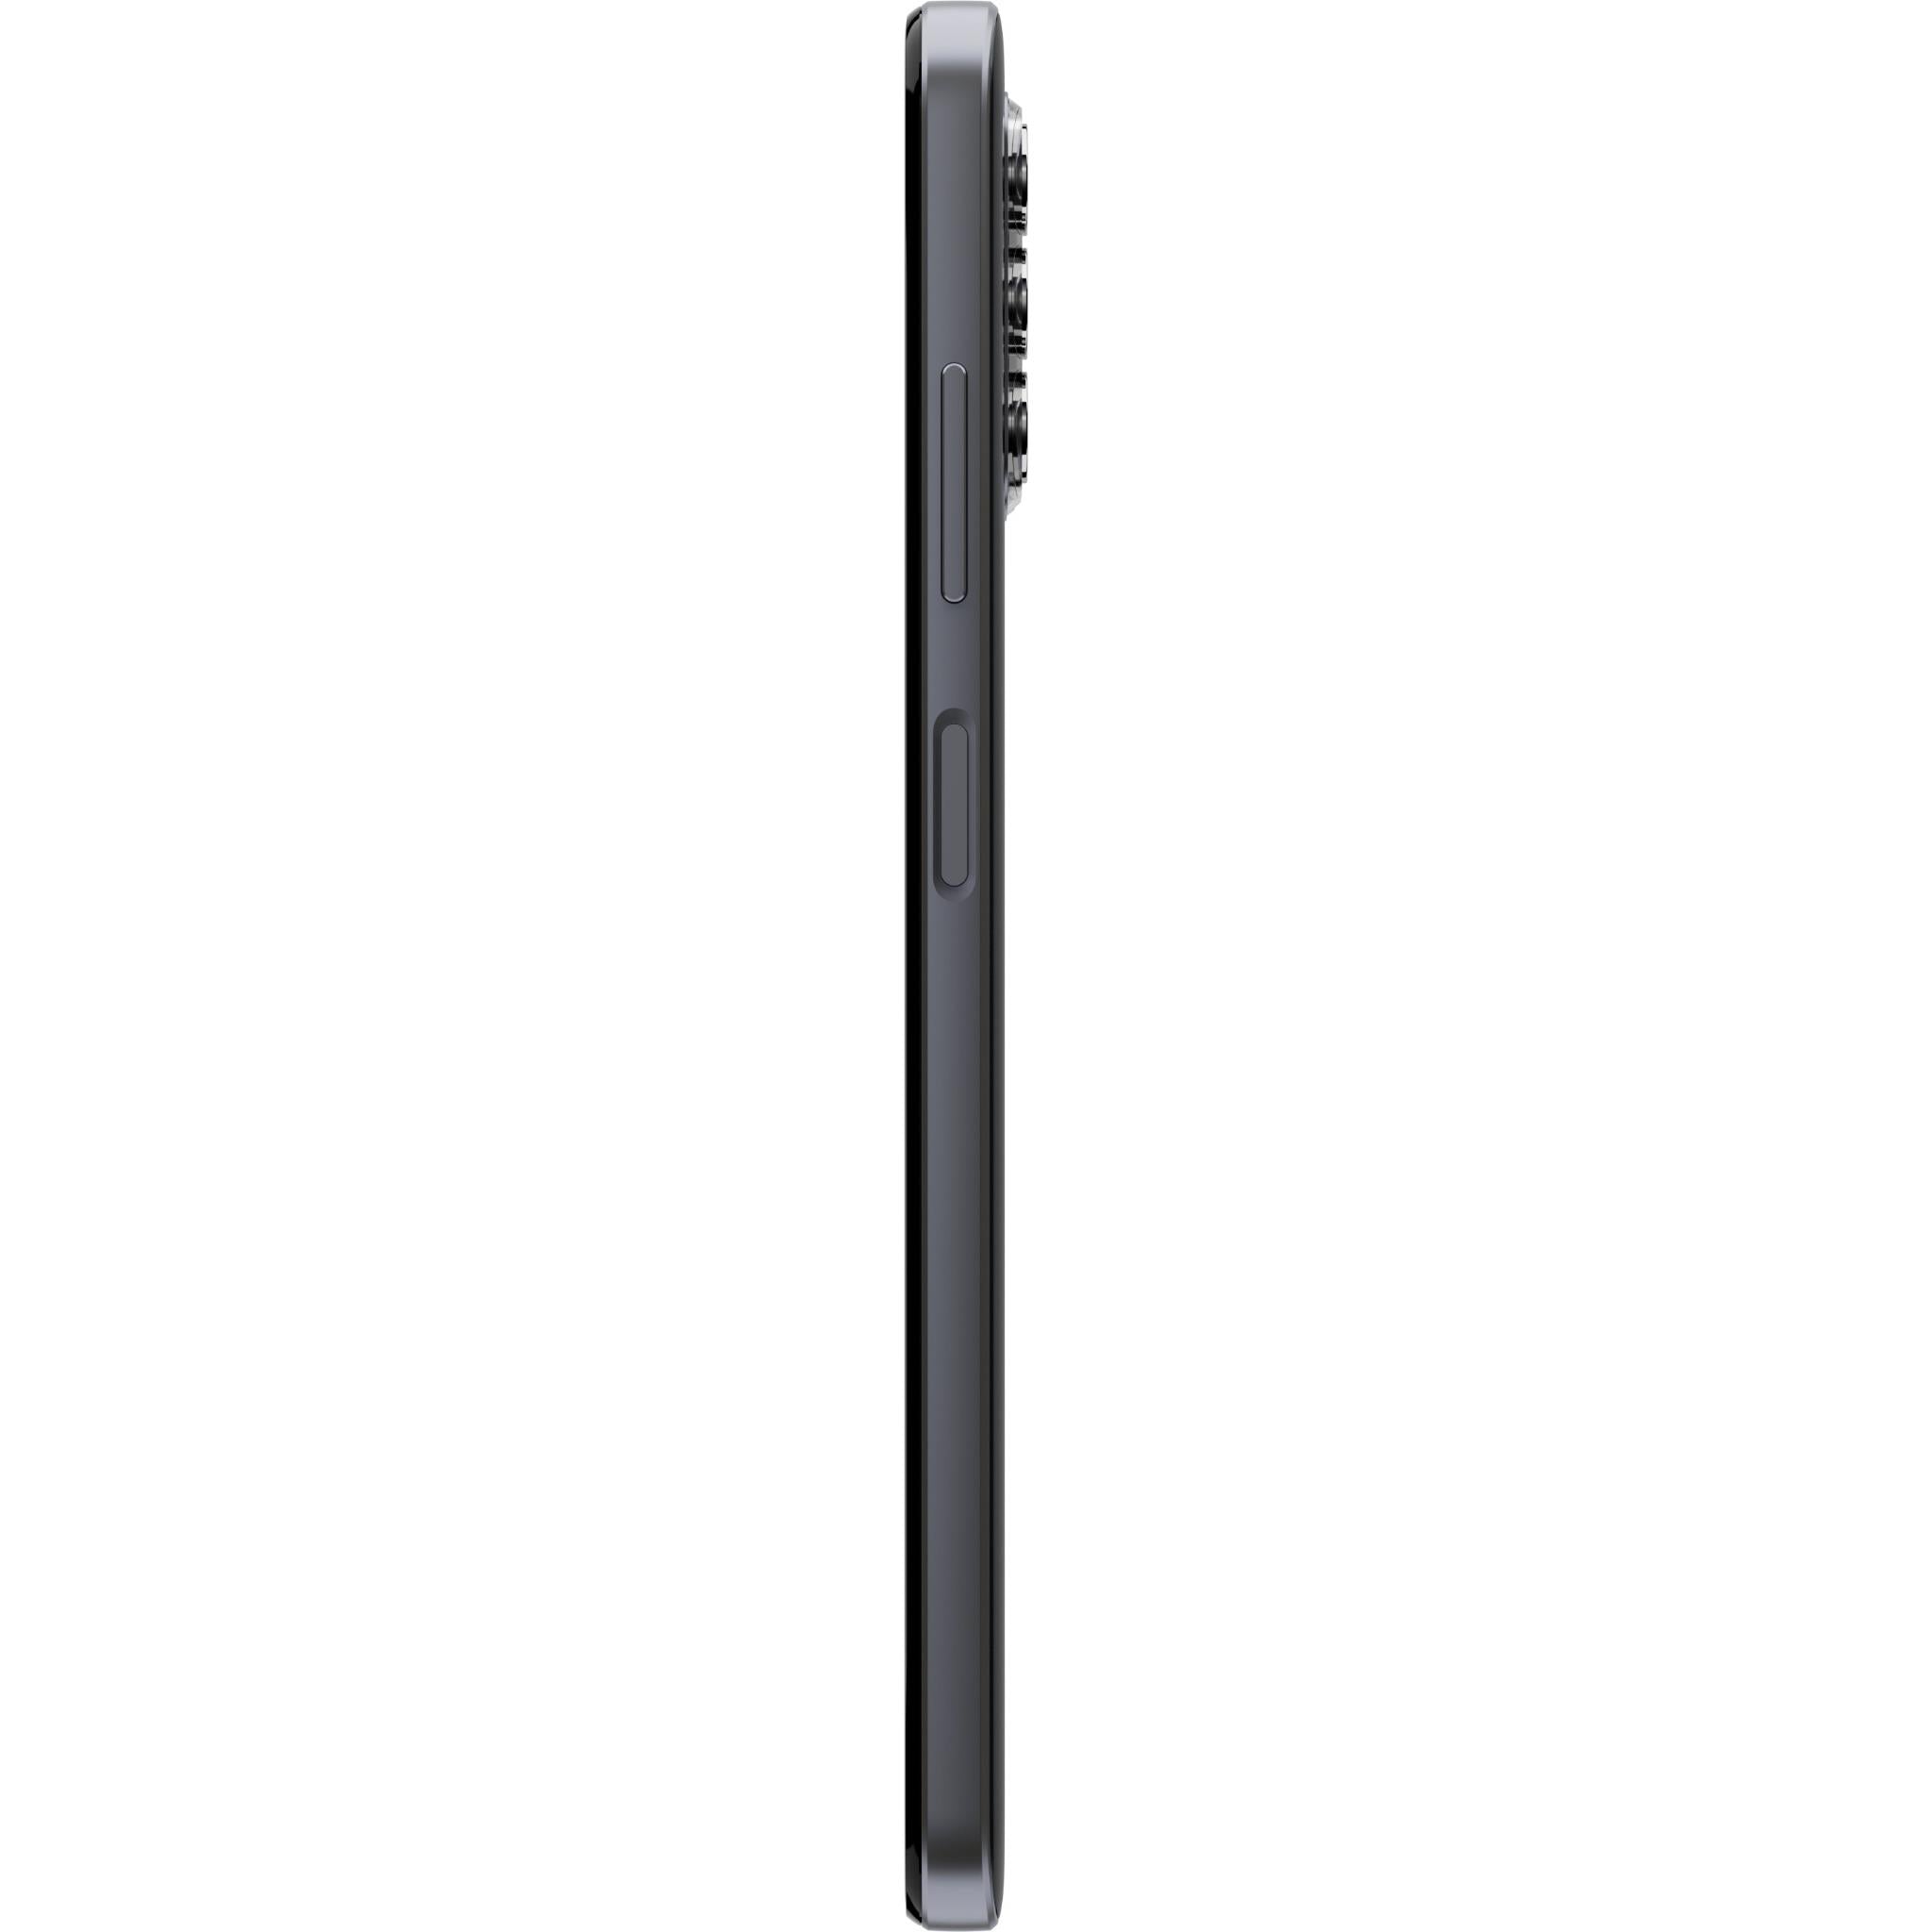 Nokia G42 5G 128GB (Grey)